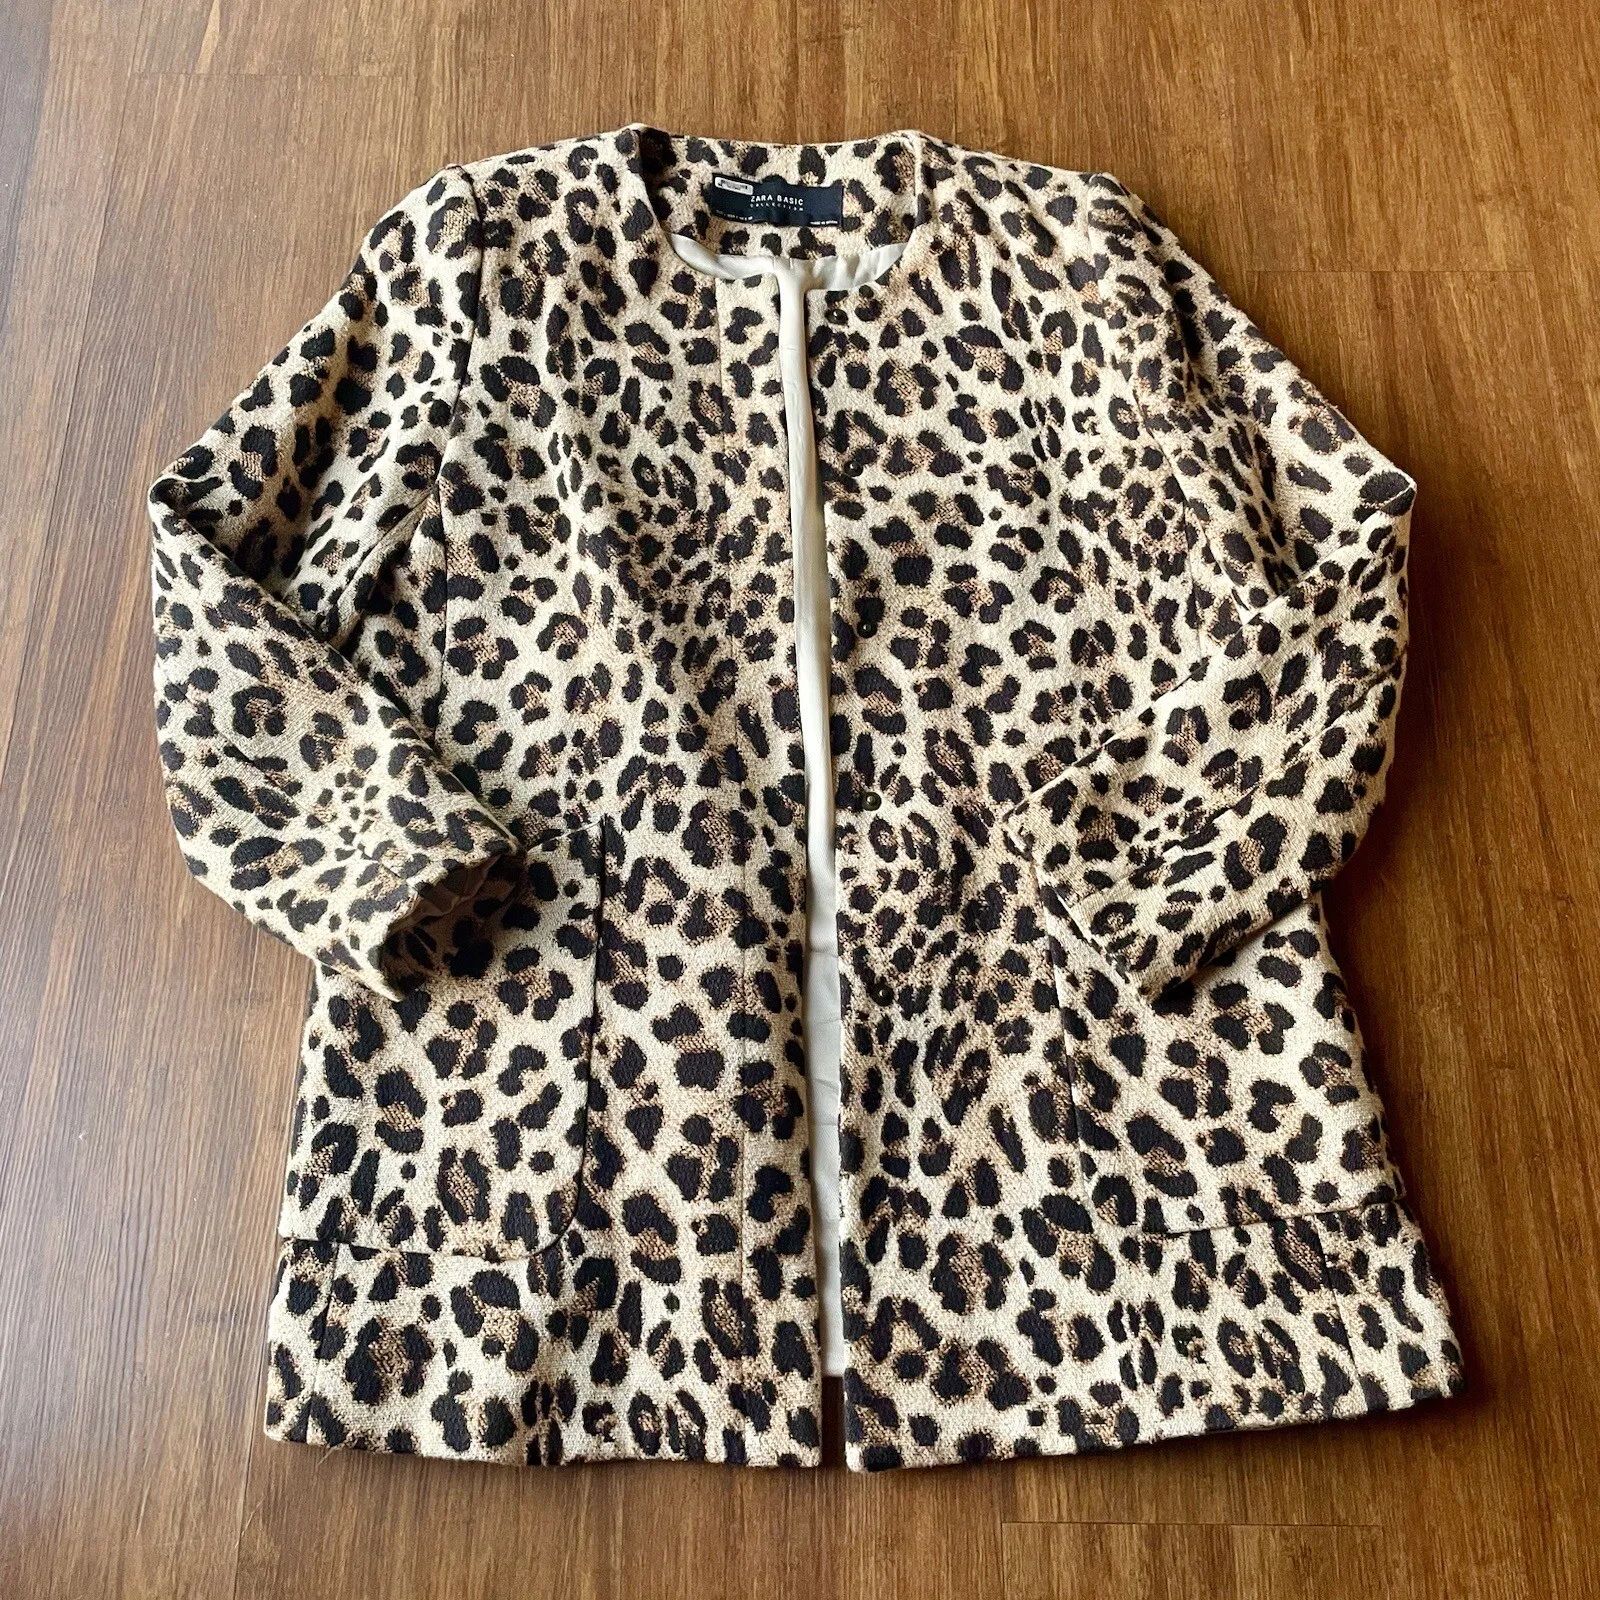 Zara Basic Collection Jacket Women Large Leopard Print Coat Collarless Animal | eBay CA